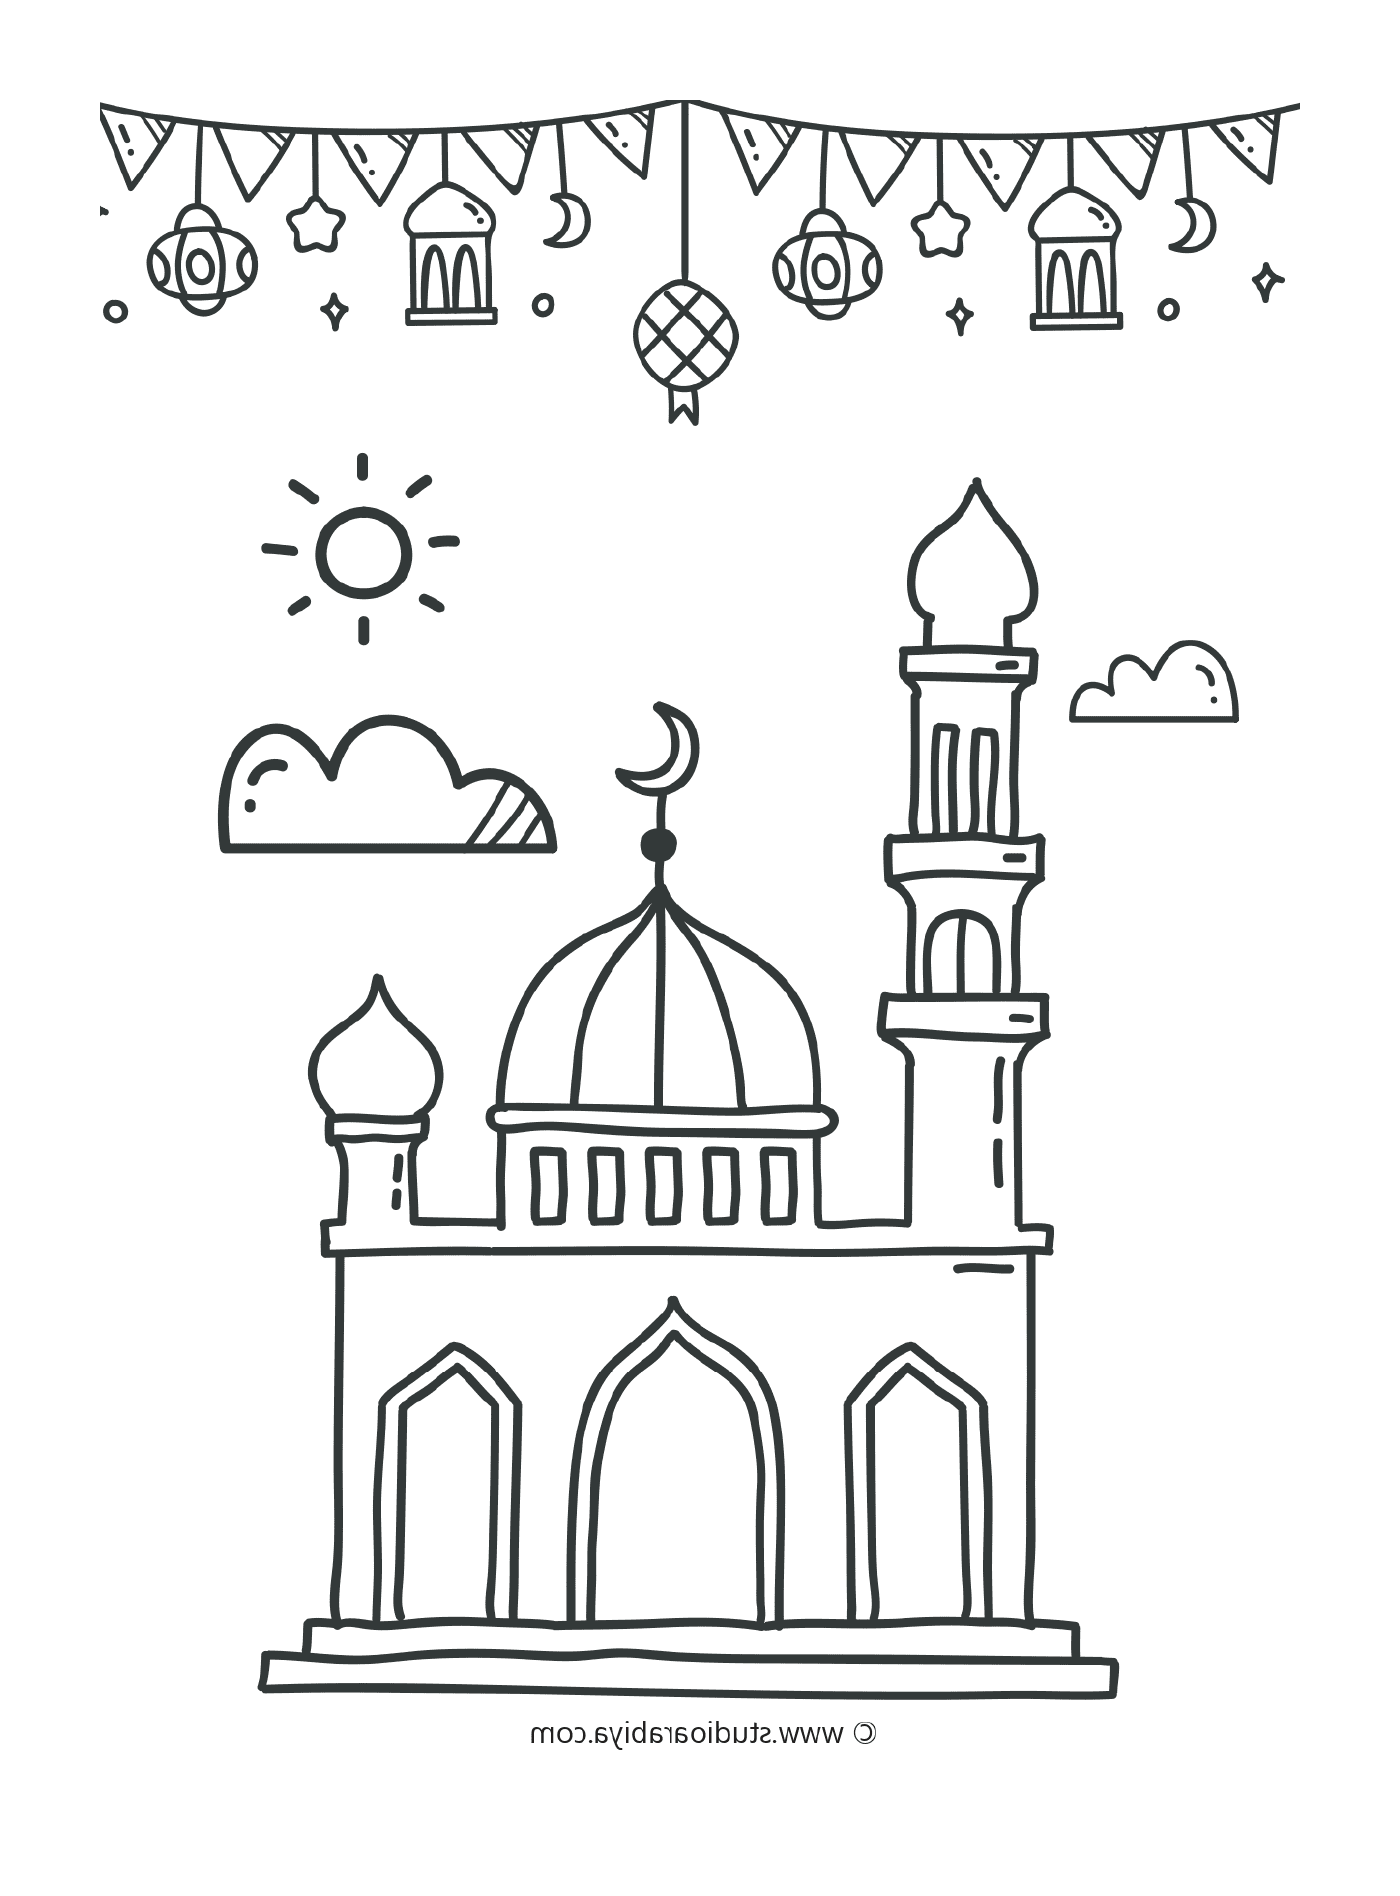  Ramadan, mesquita iluminada 